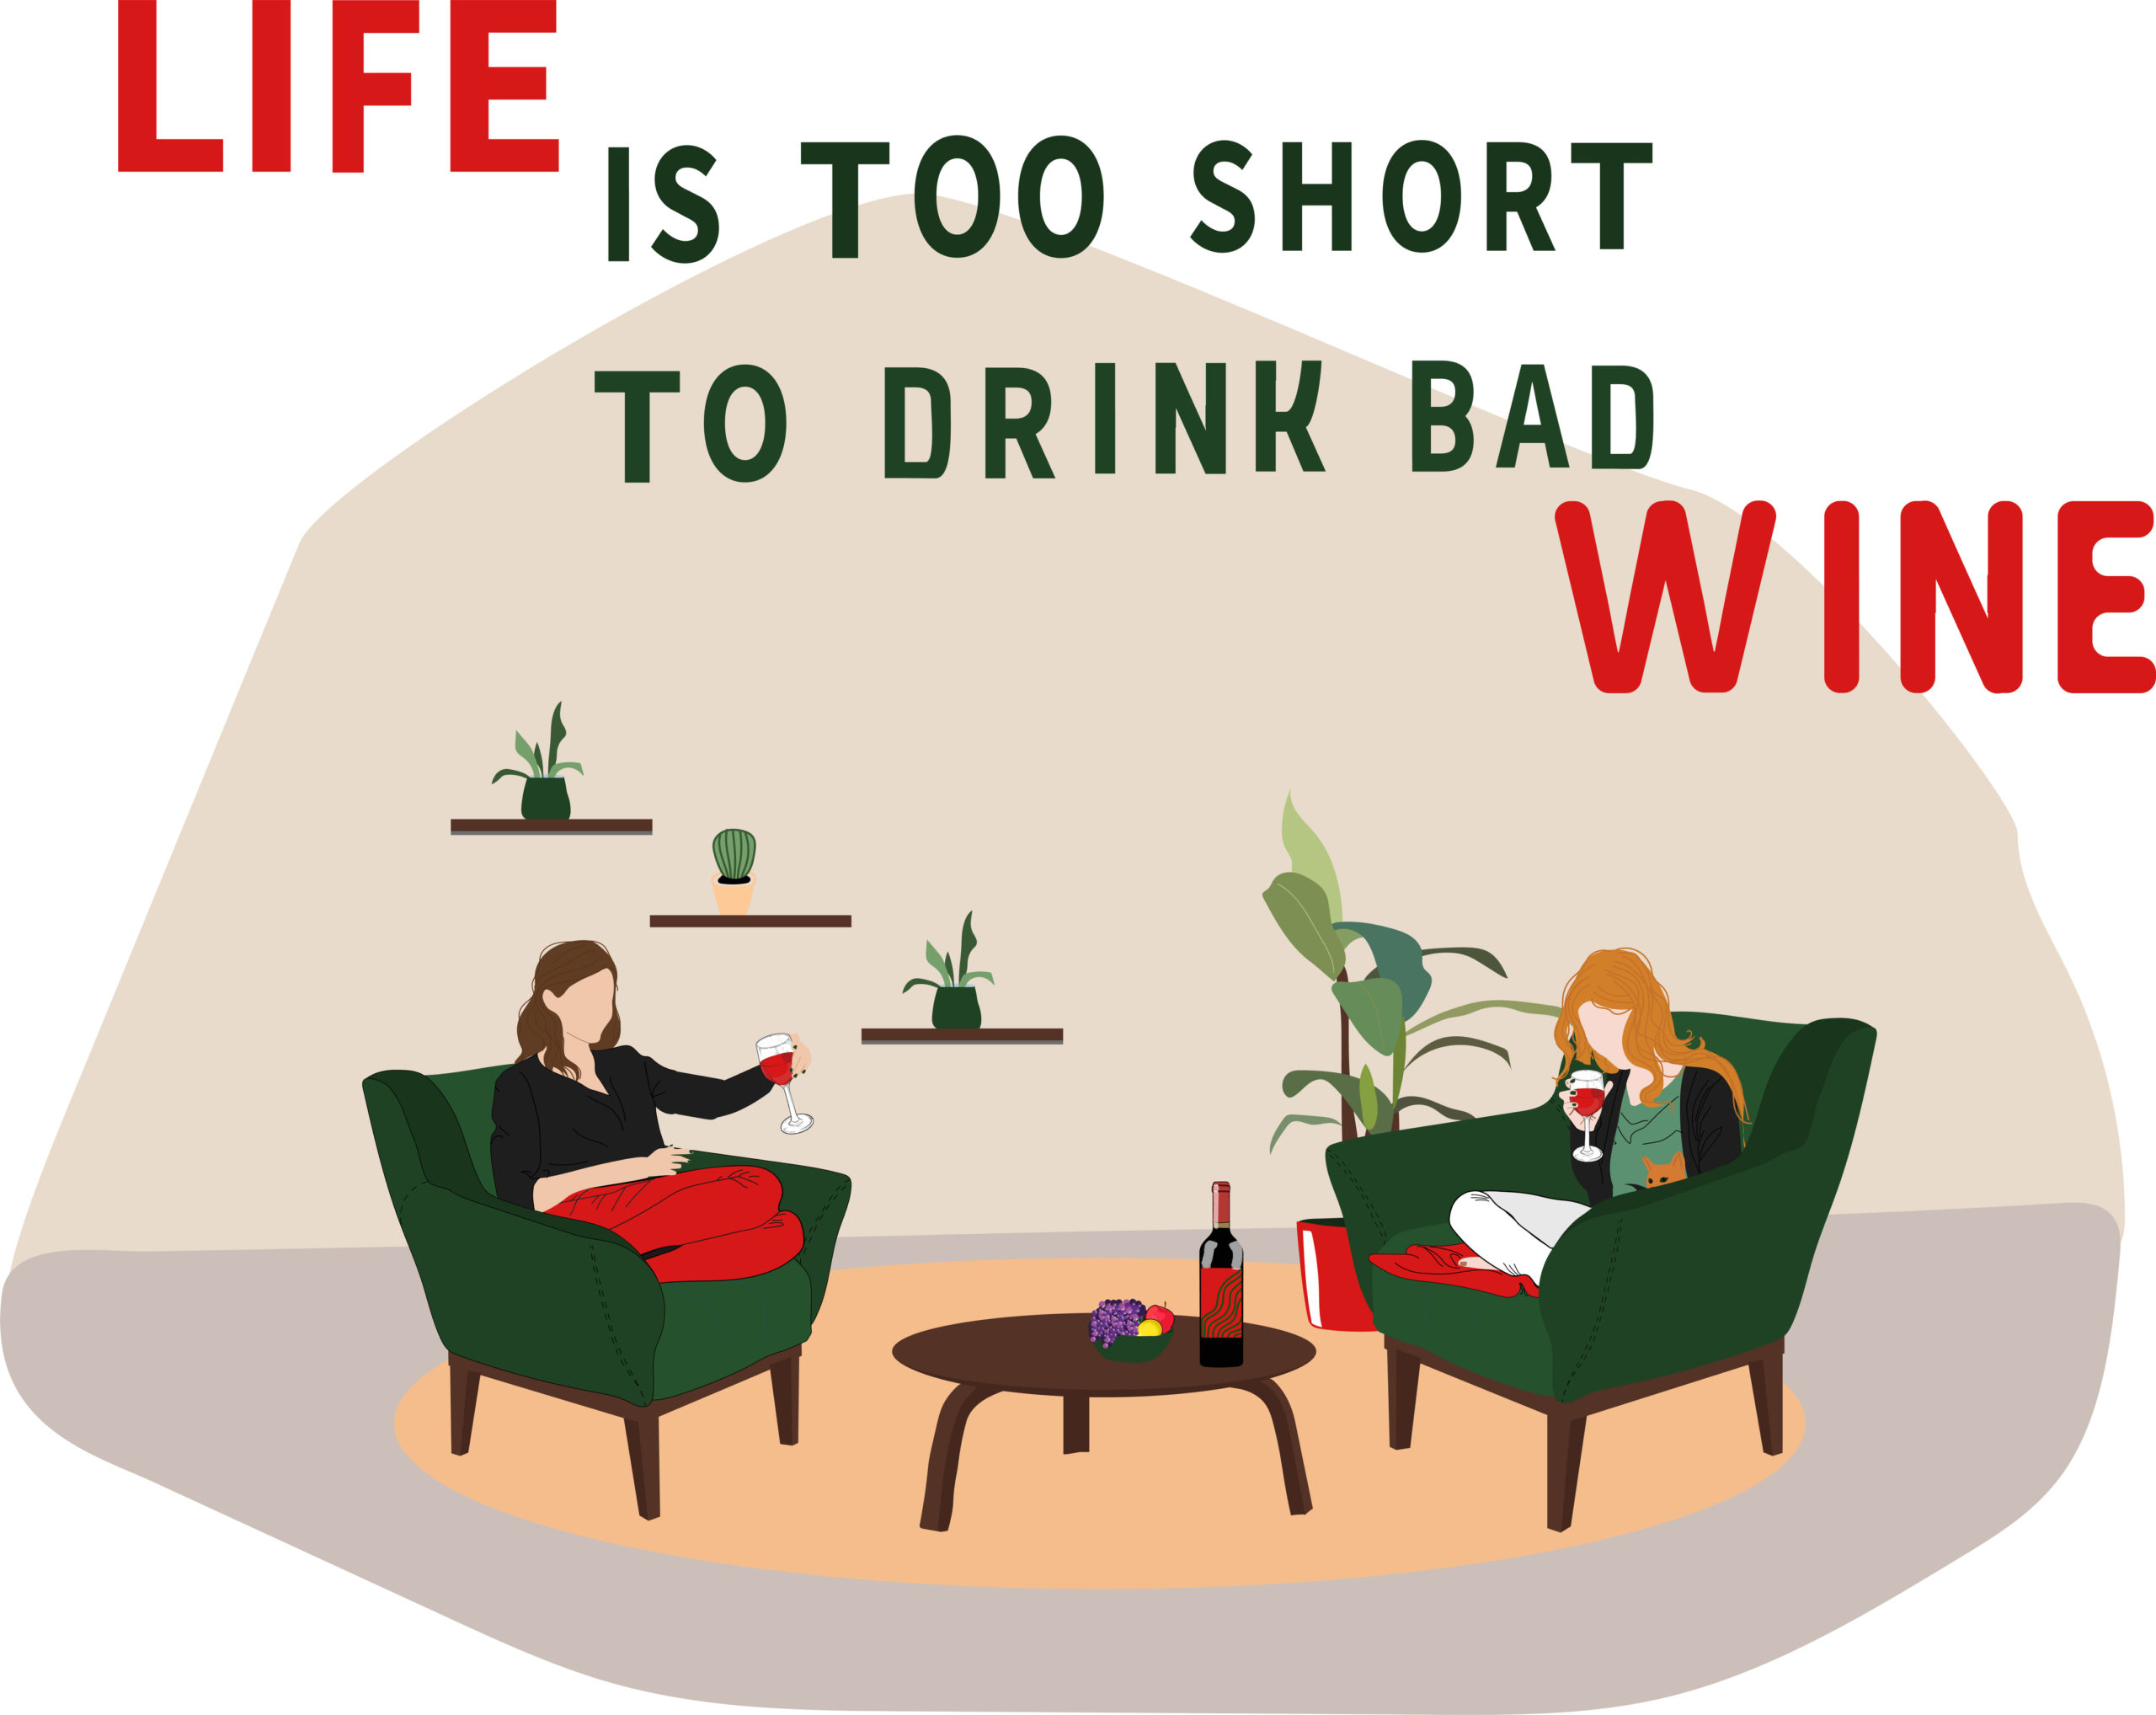 Life is too short to drink bad wine cartoon